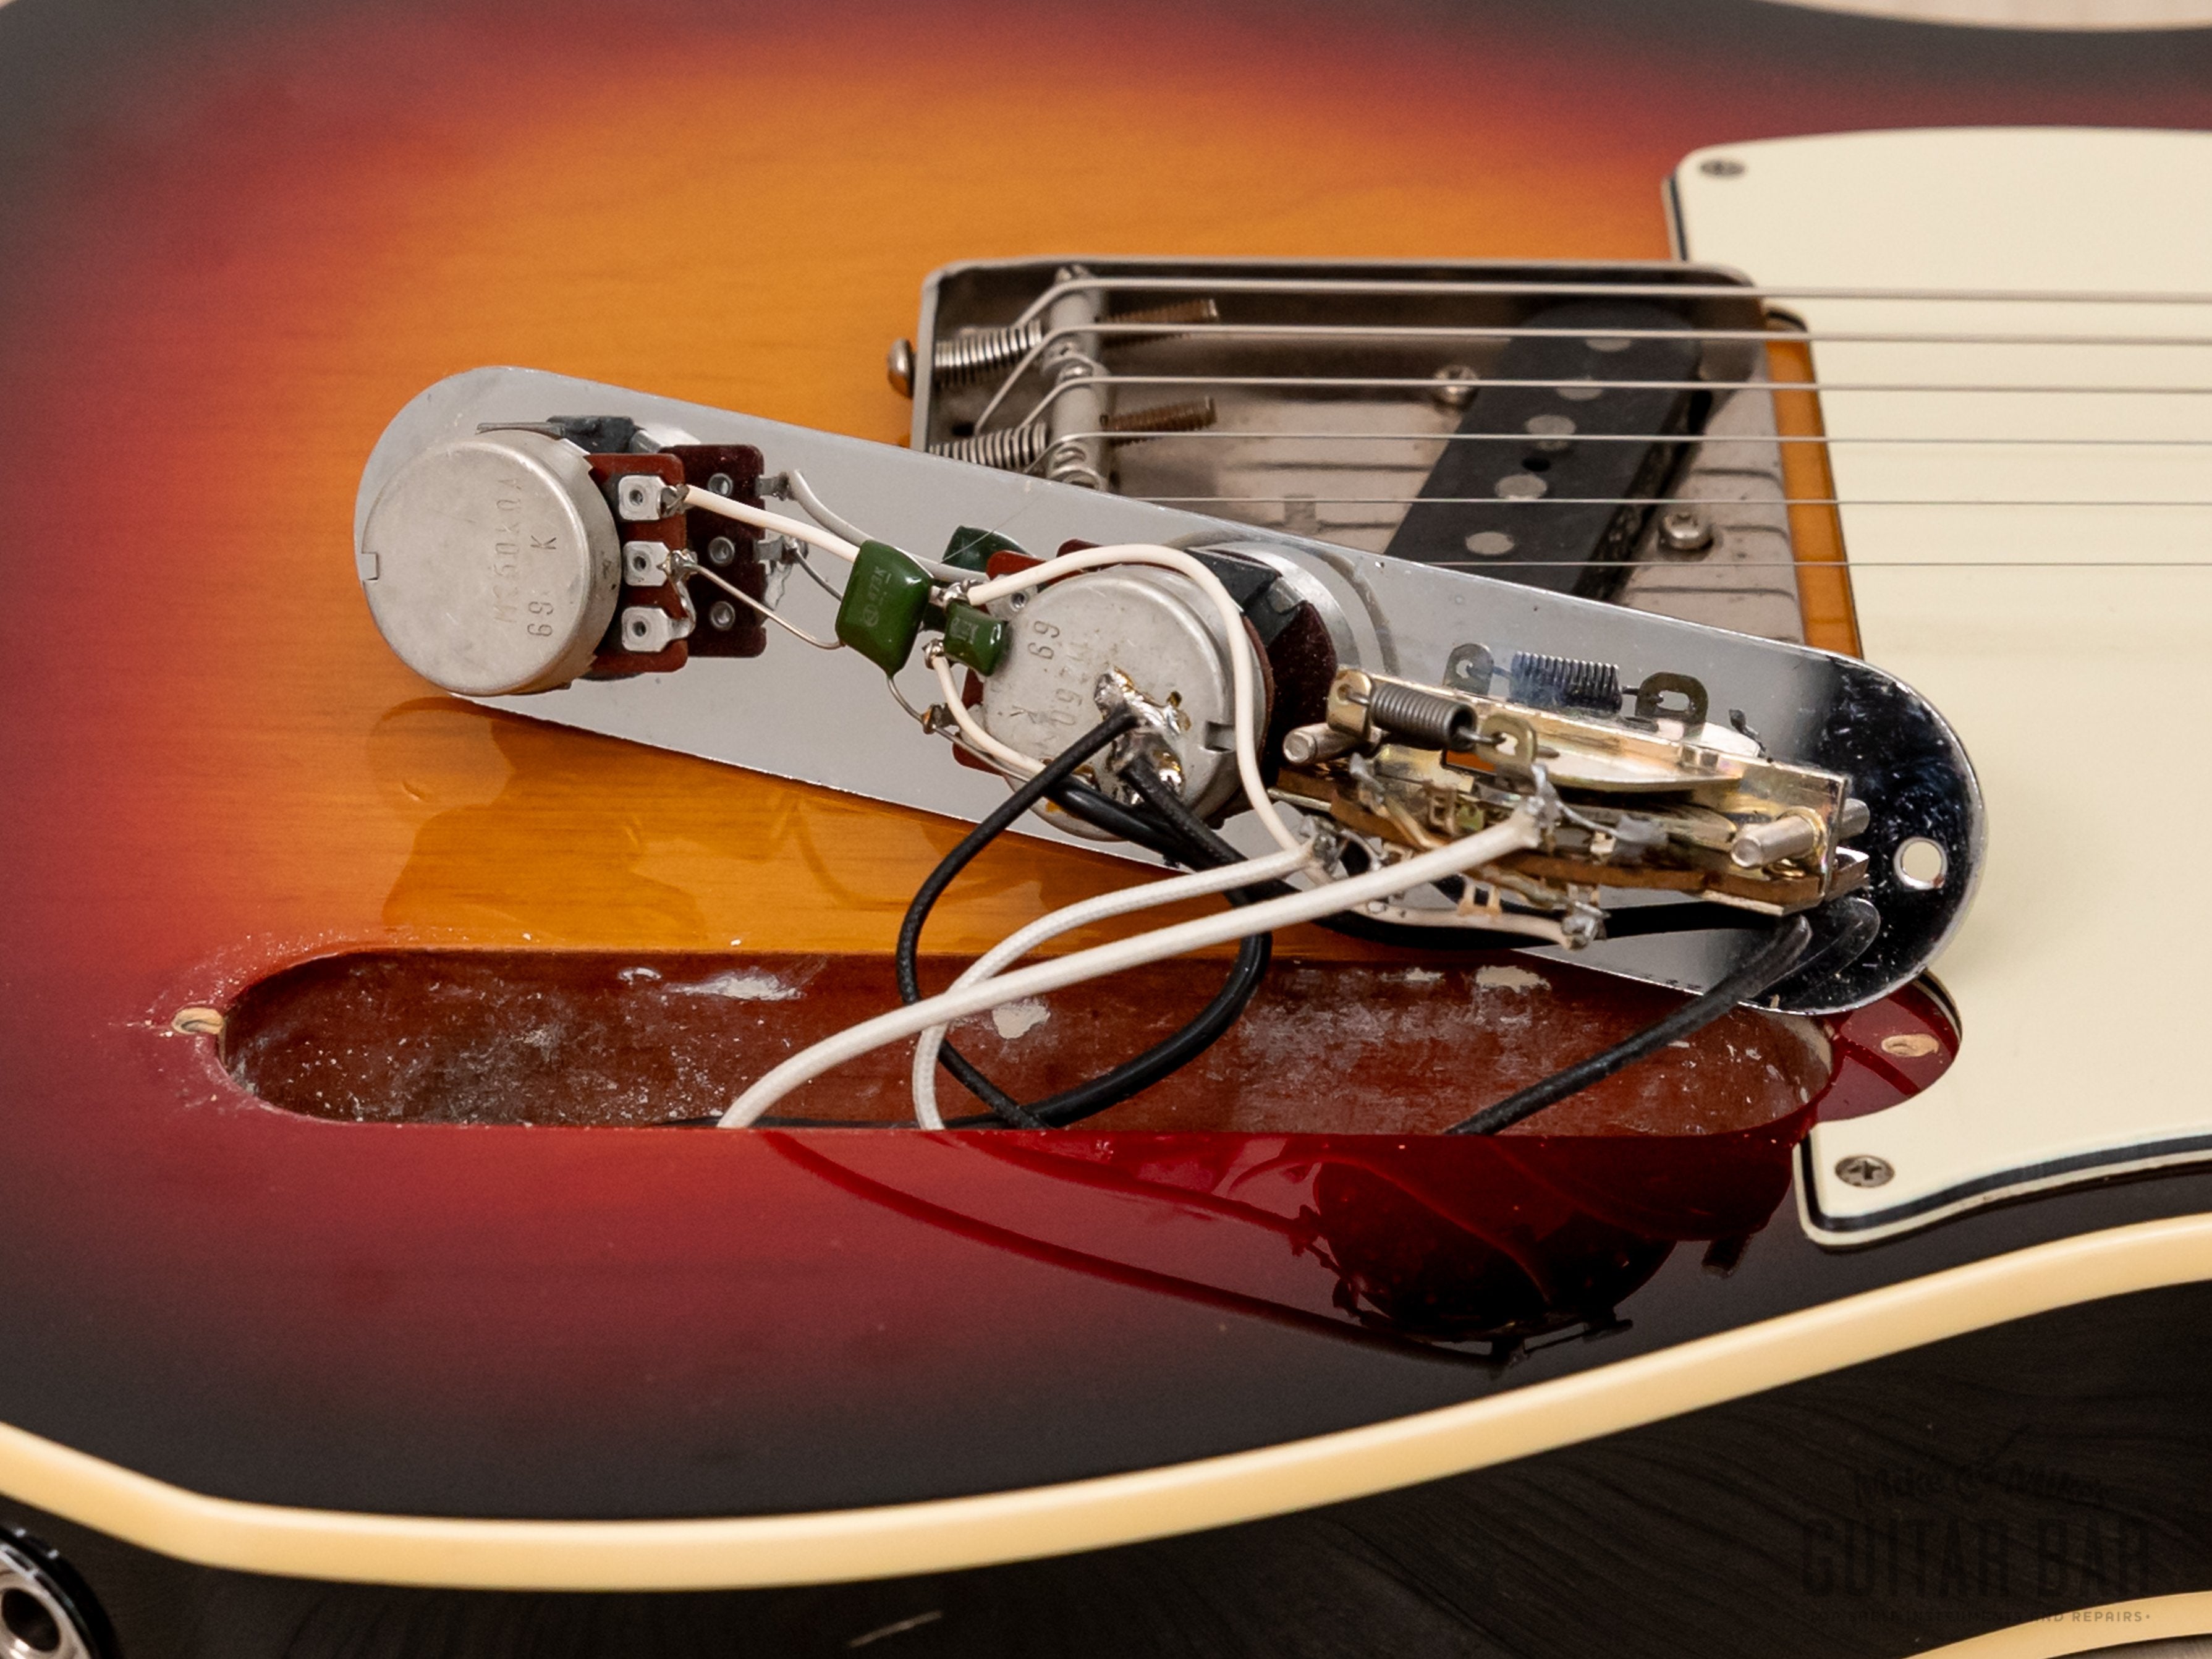 1986 ESP 400 Series Vintage T-Style Custom Electric Guitar Sunburst w/ Case, Matt Umanov